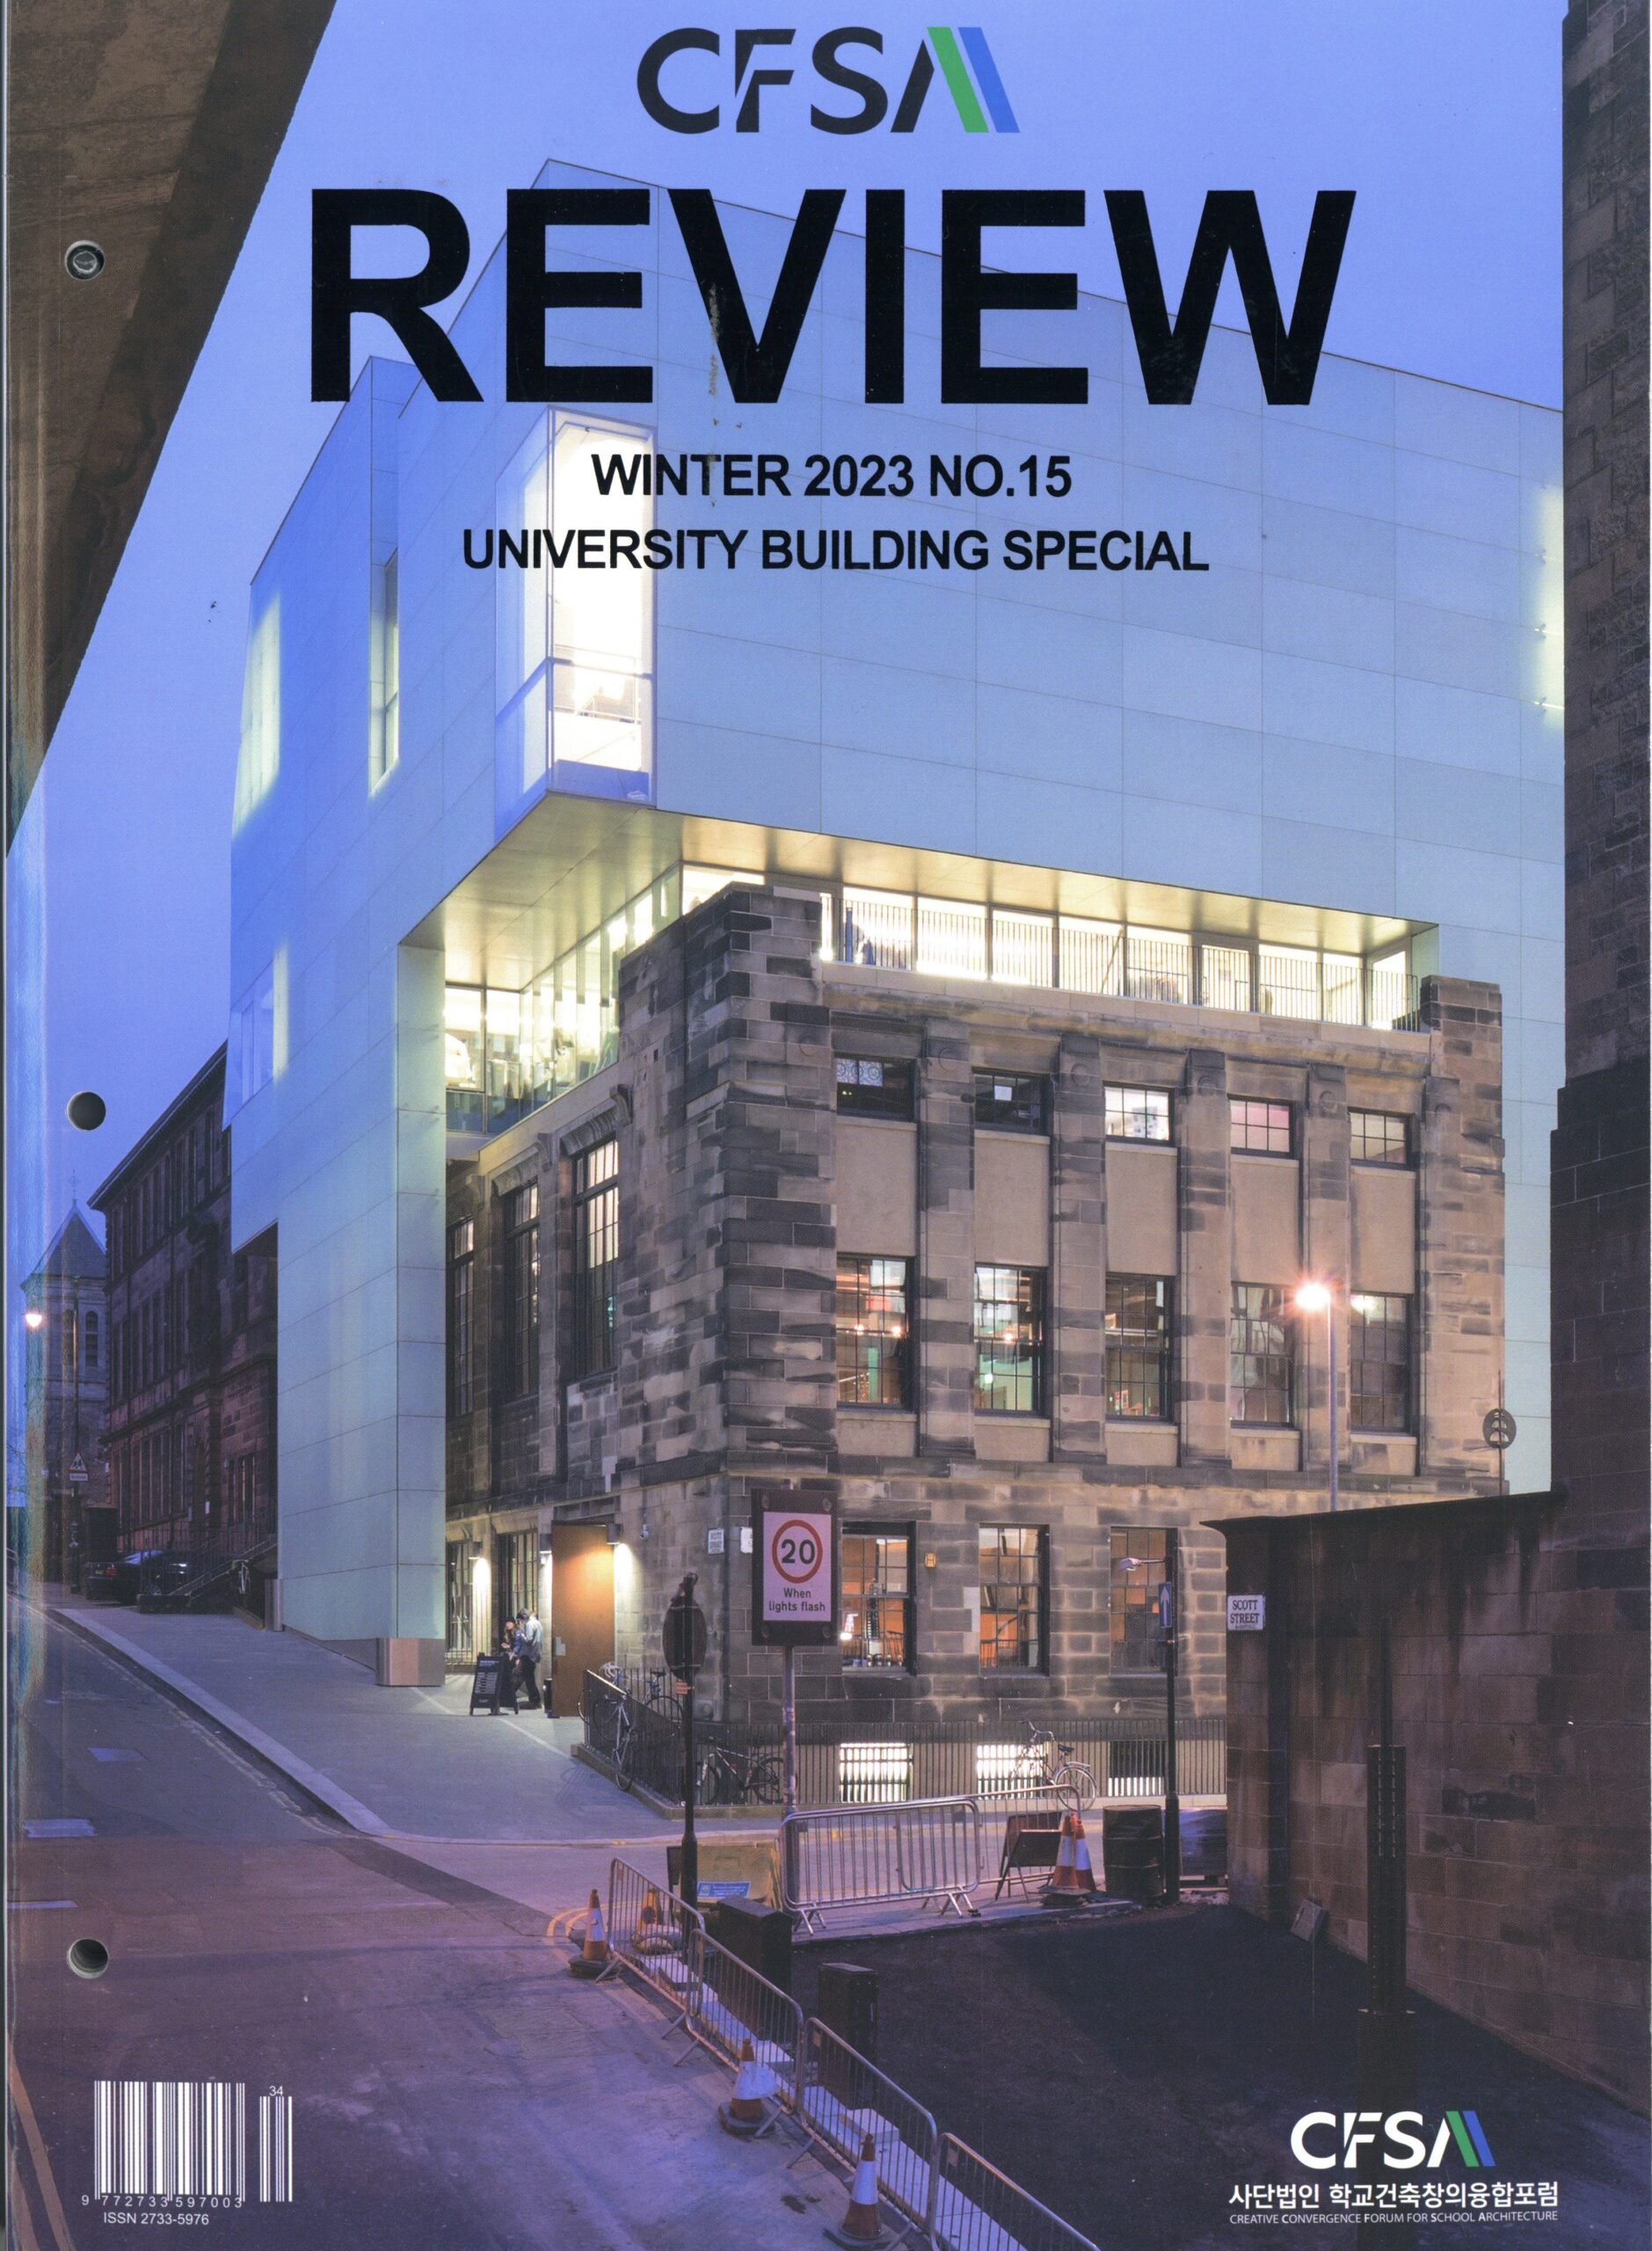 Reid Building, Glasgow School of Art Cover Feature